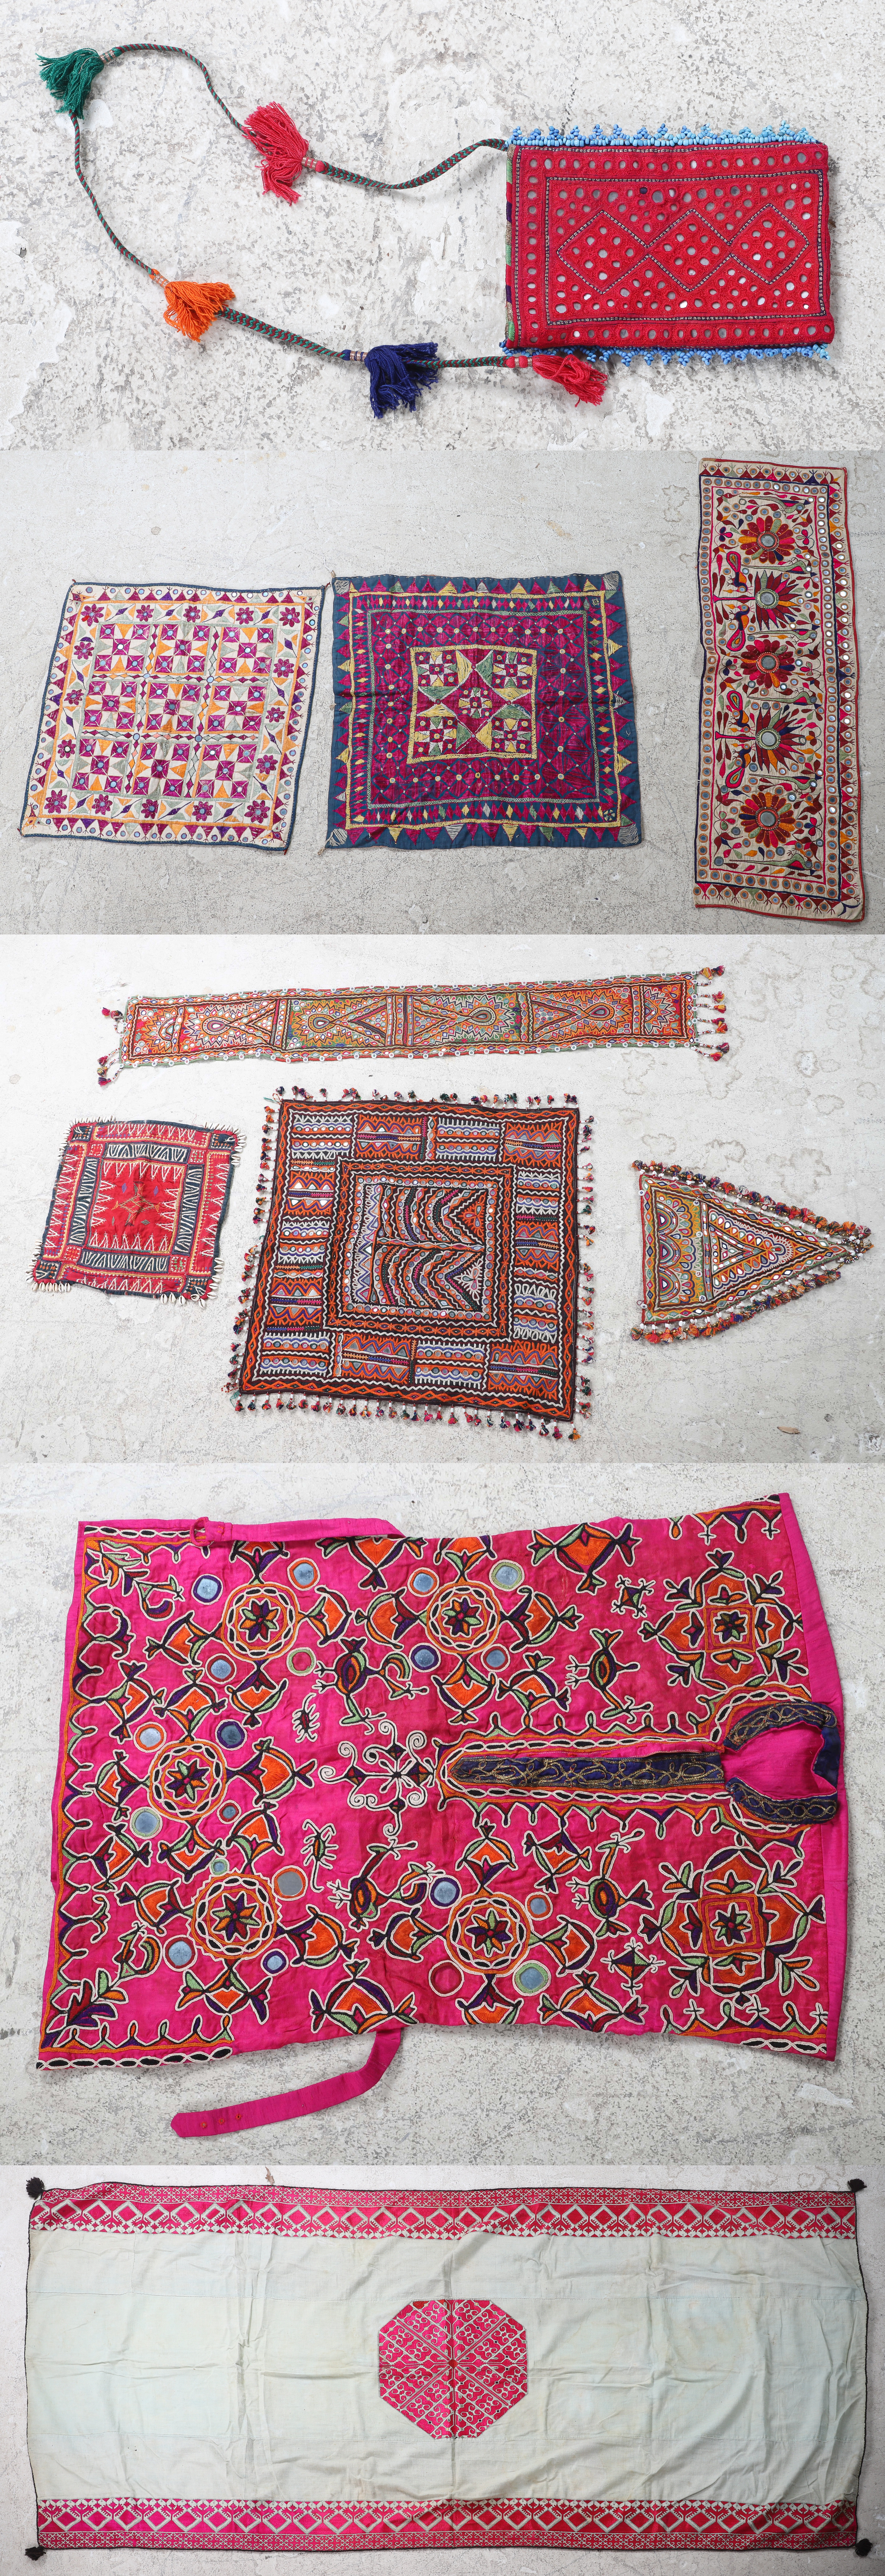 Banjara fabrics and vest, vest